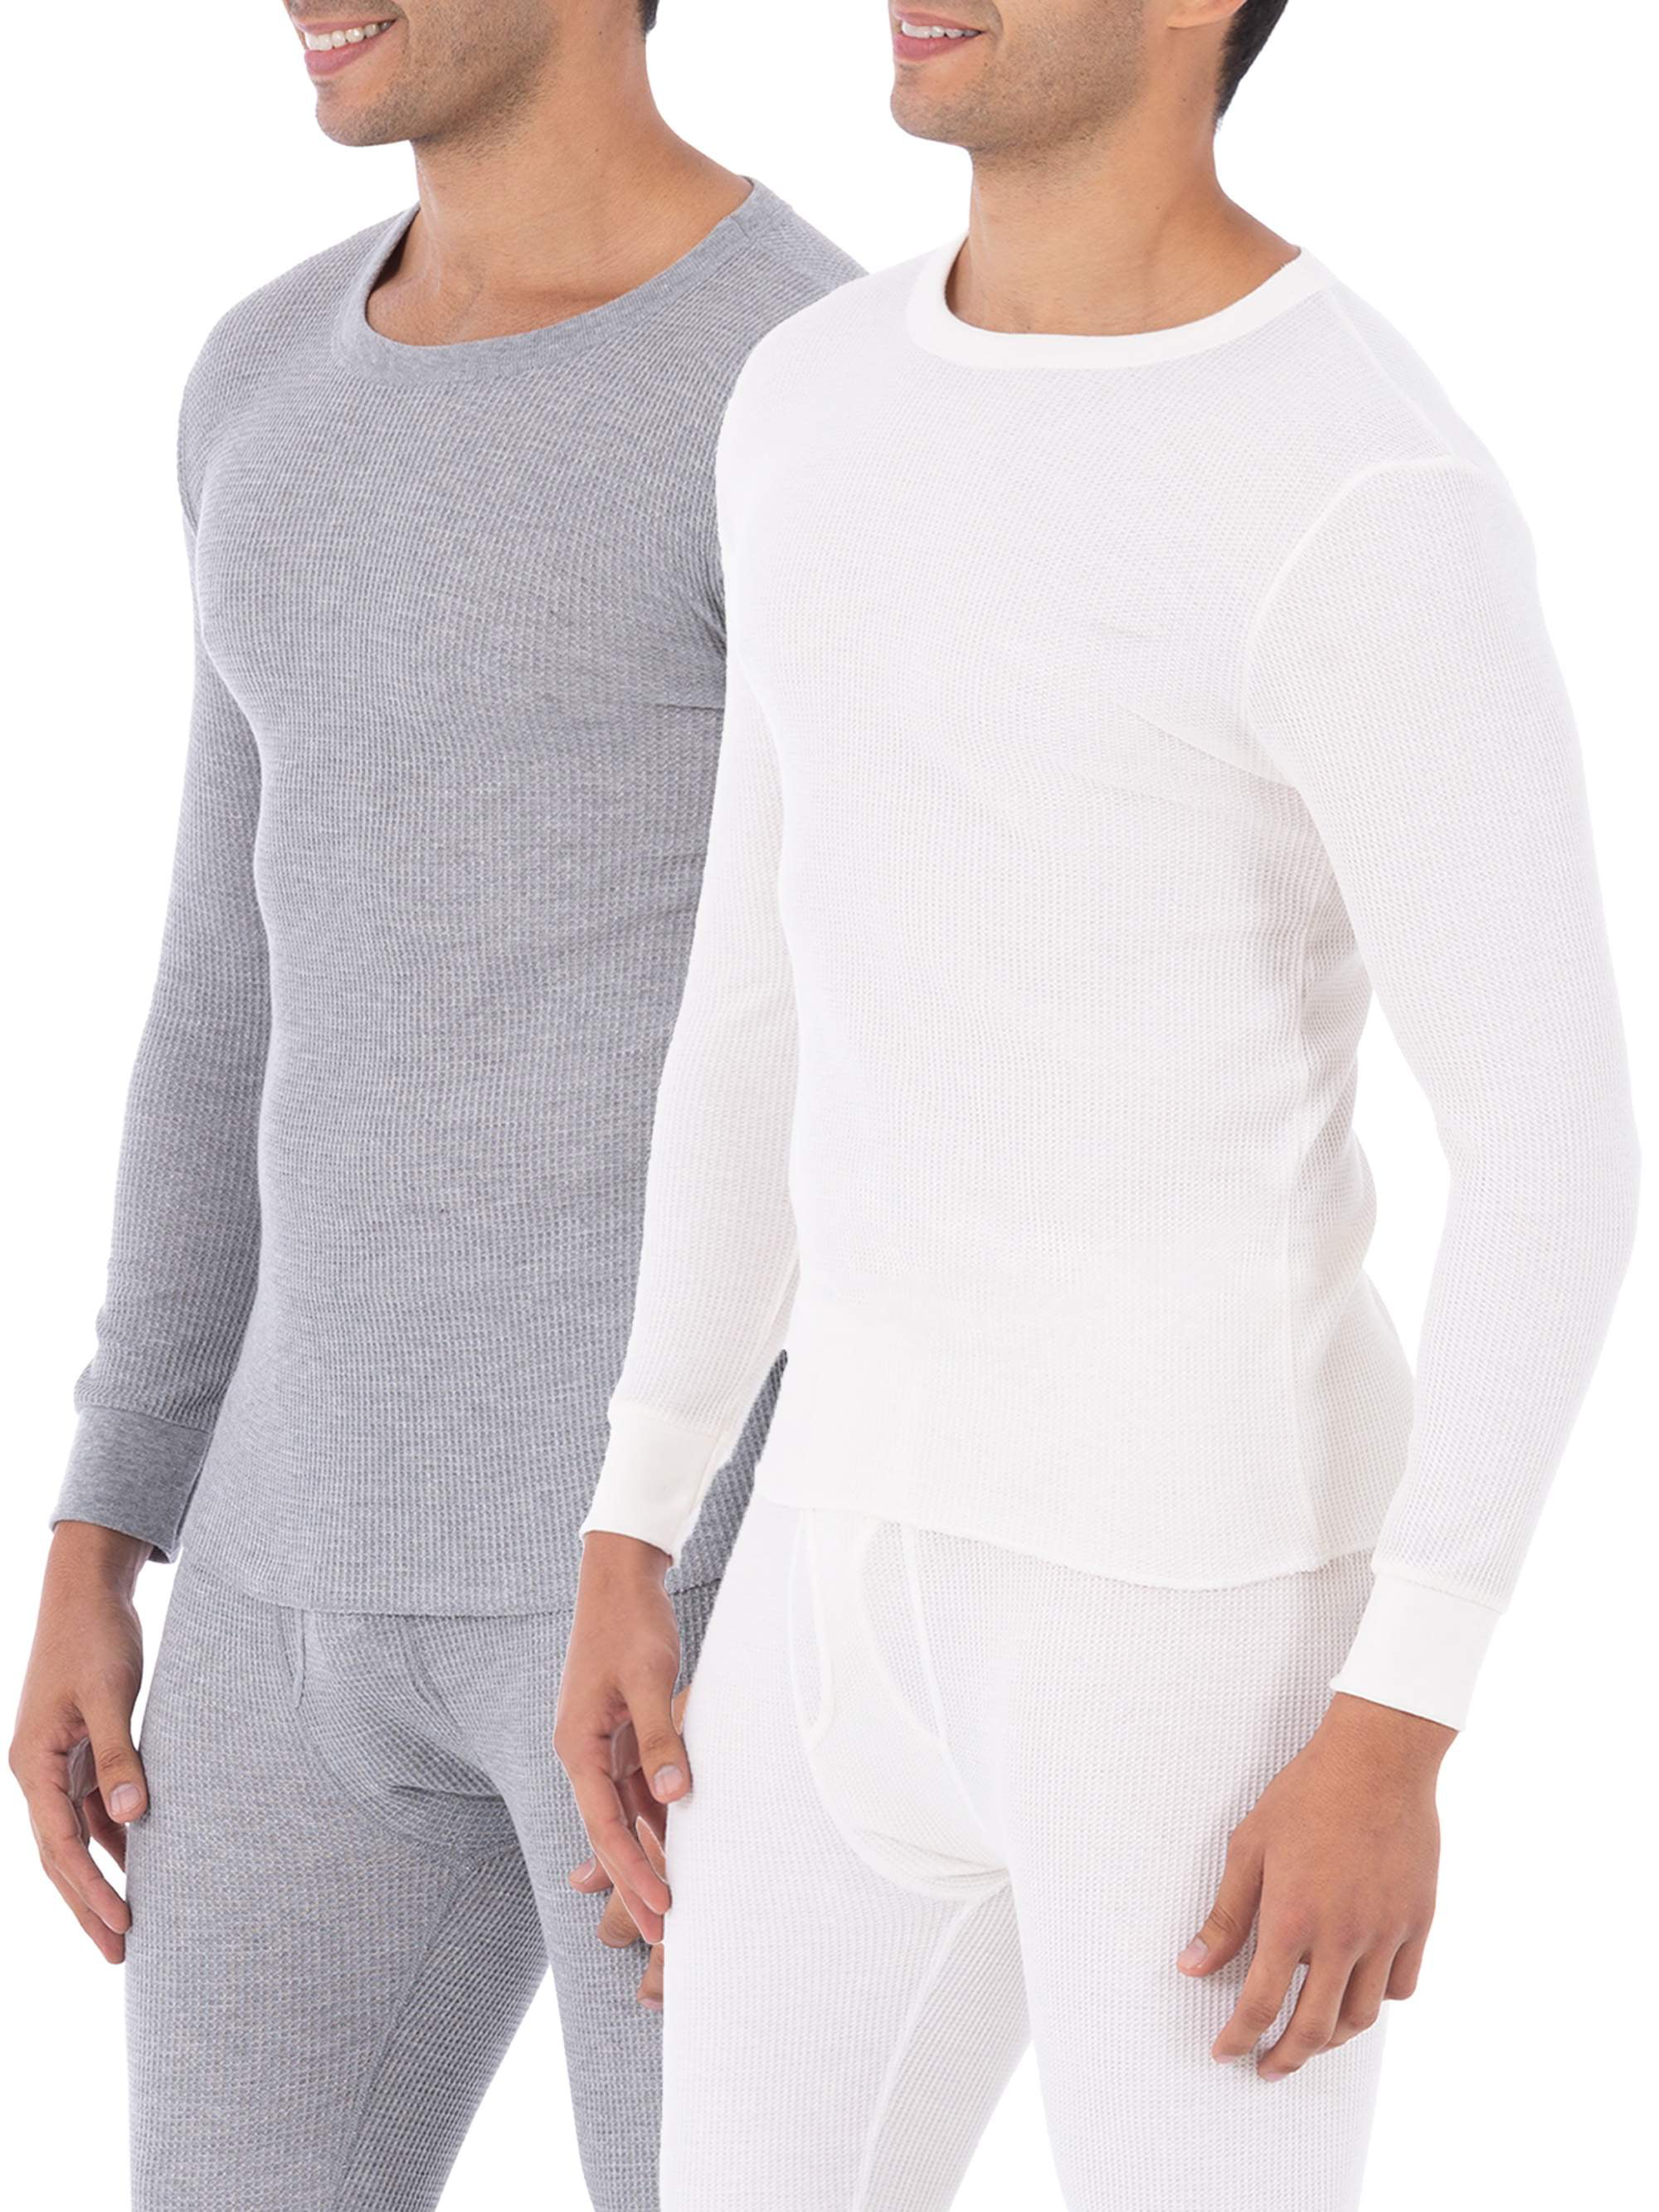 2 Pack Men Thermal Top Short Sleeve Heavy Duty Fabric Winter Underwear Top 